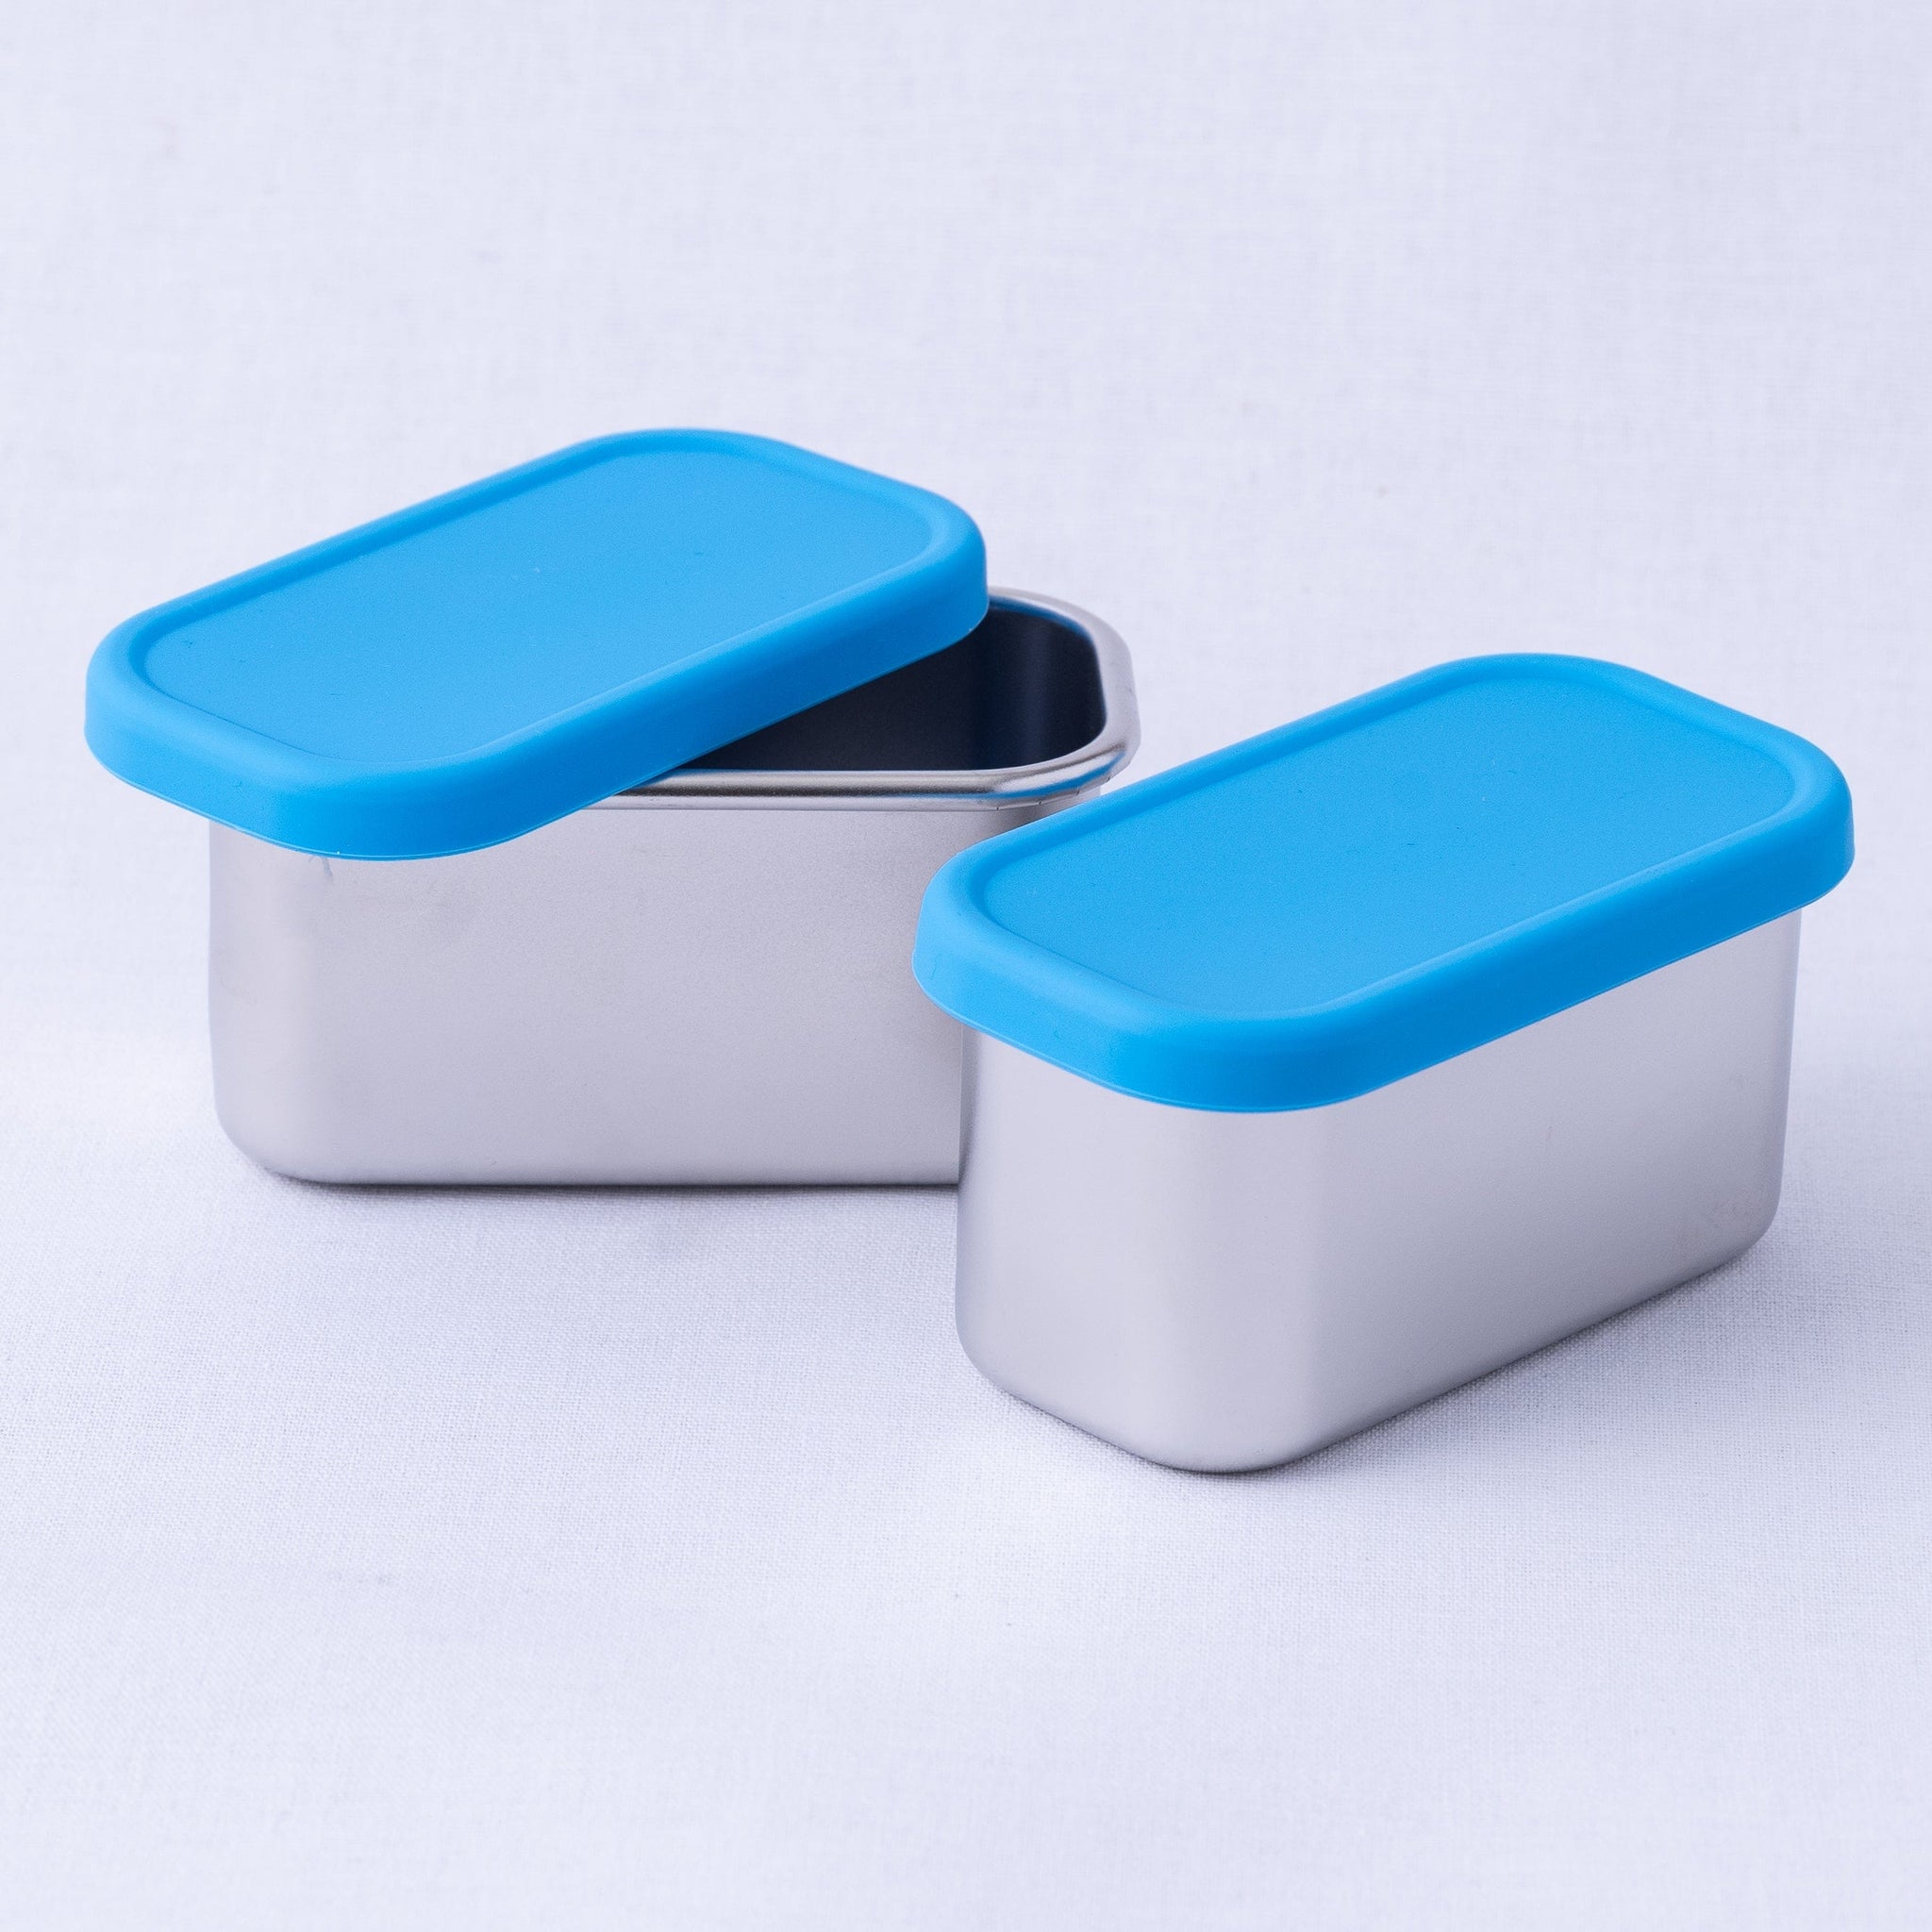 TheMix Shop Food Storage TheMix Bento Box Lunchbox Containers (Set of 2)